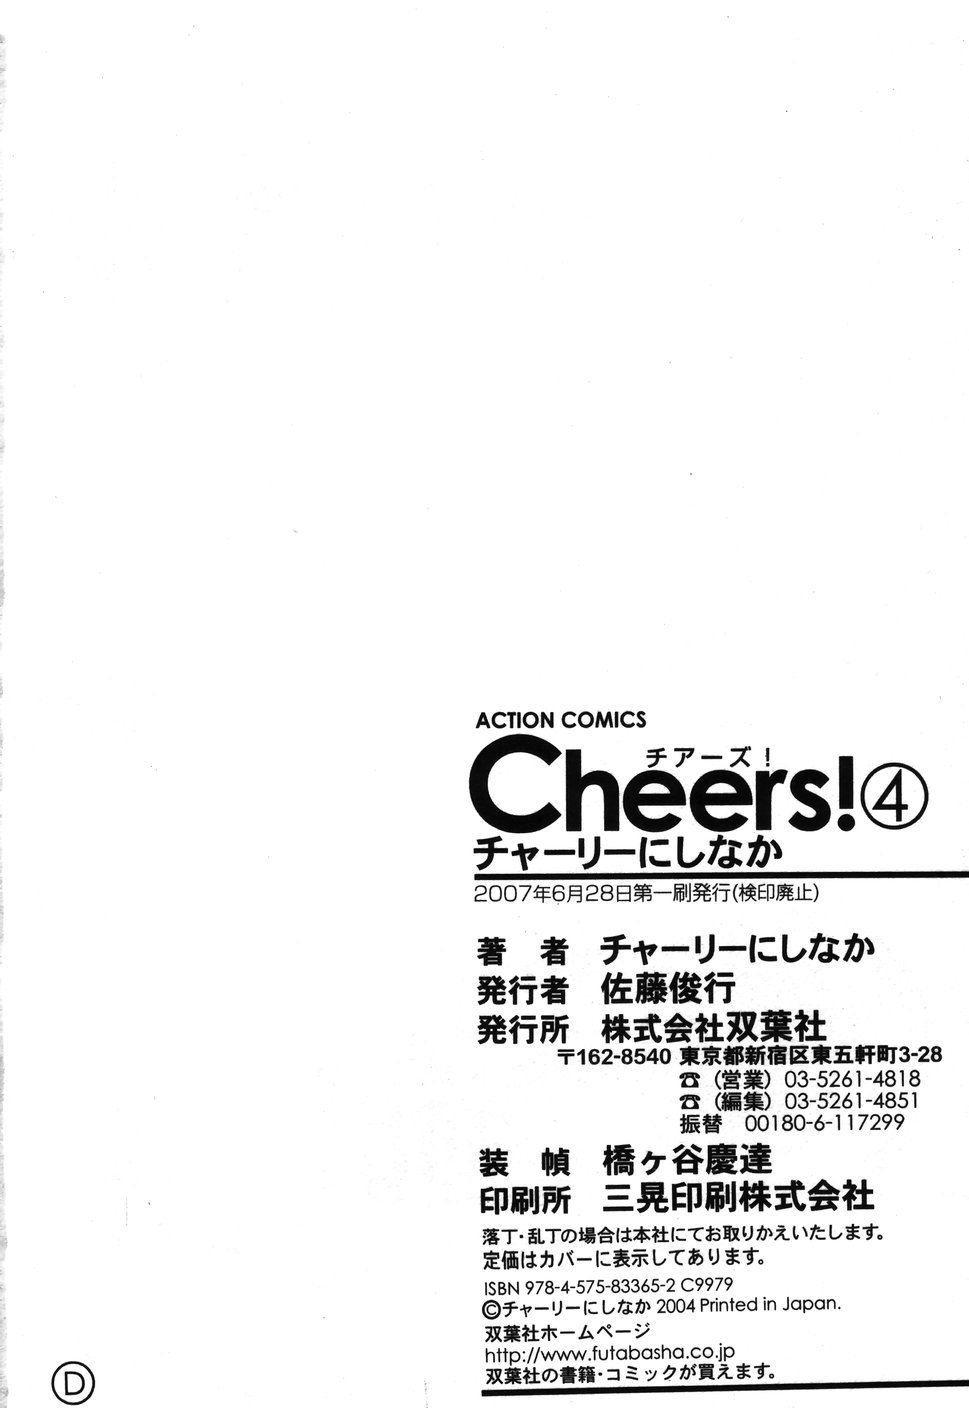 [Charlie Nishinaka] Cheers! Vol. 4 [チャーリーにしなか] Cheers！ チア―ズ！4